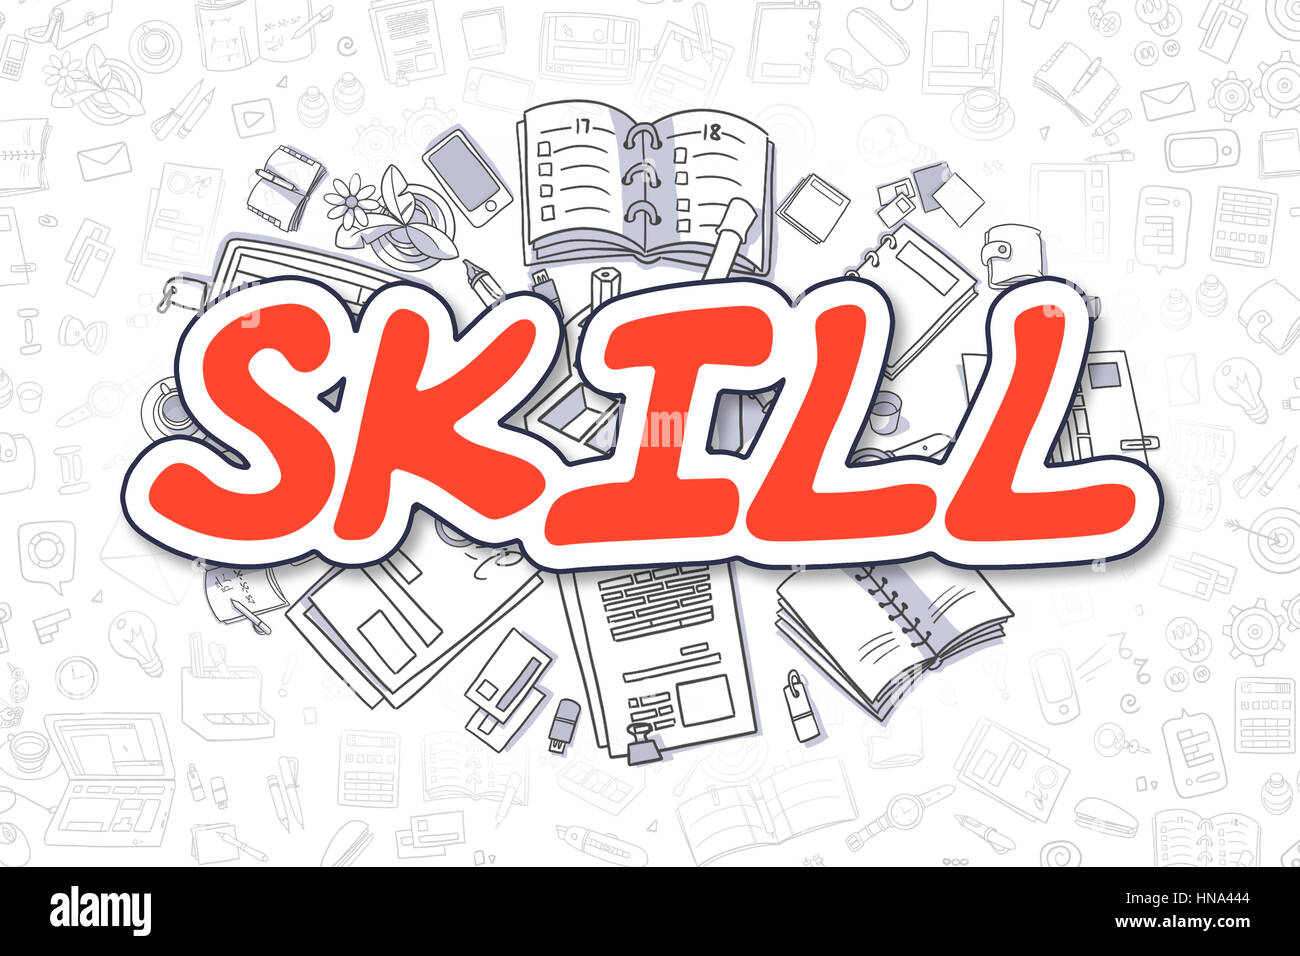 Skill - Cartoon Red Inscription. Business Concept. Stock Photo